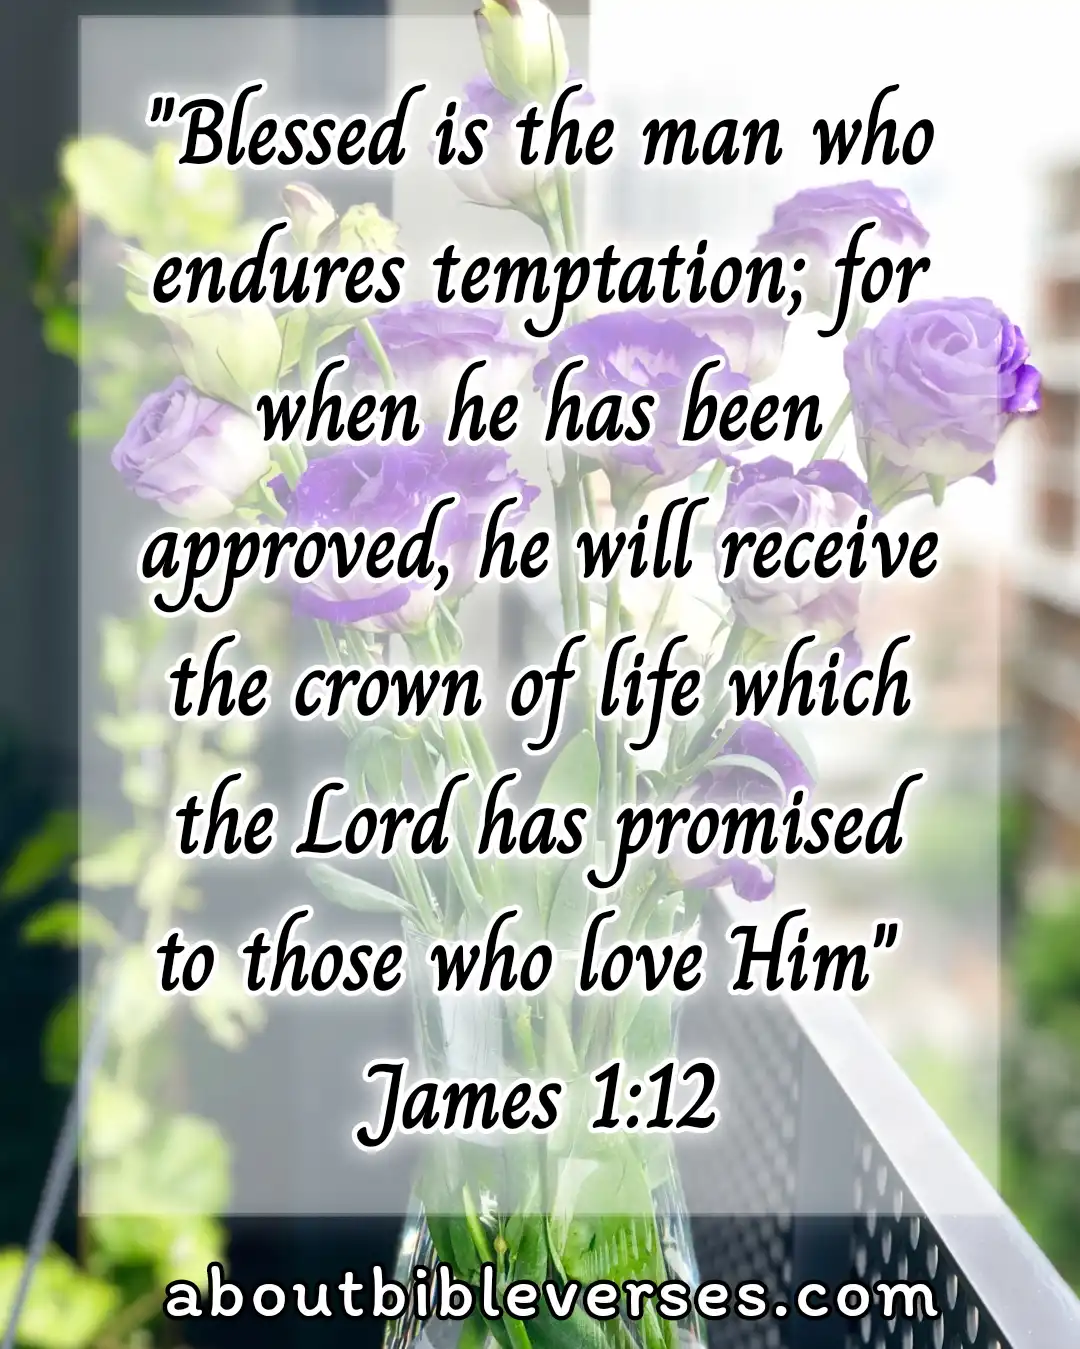 God Blessed Us (James 1:12)